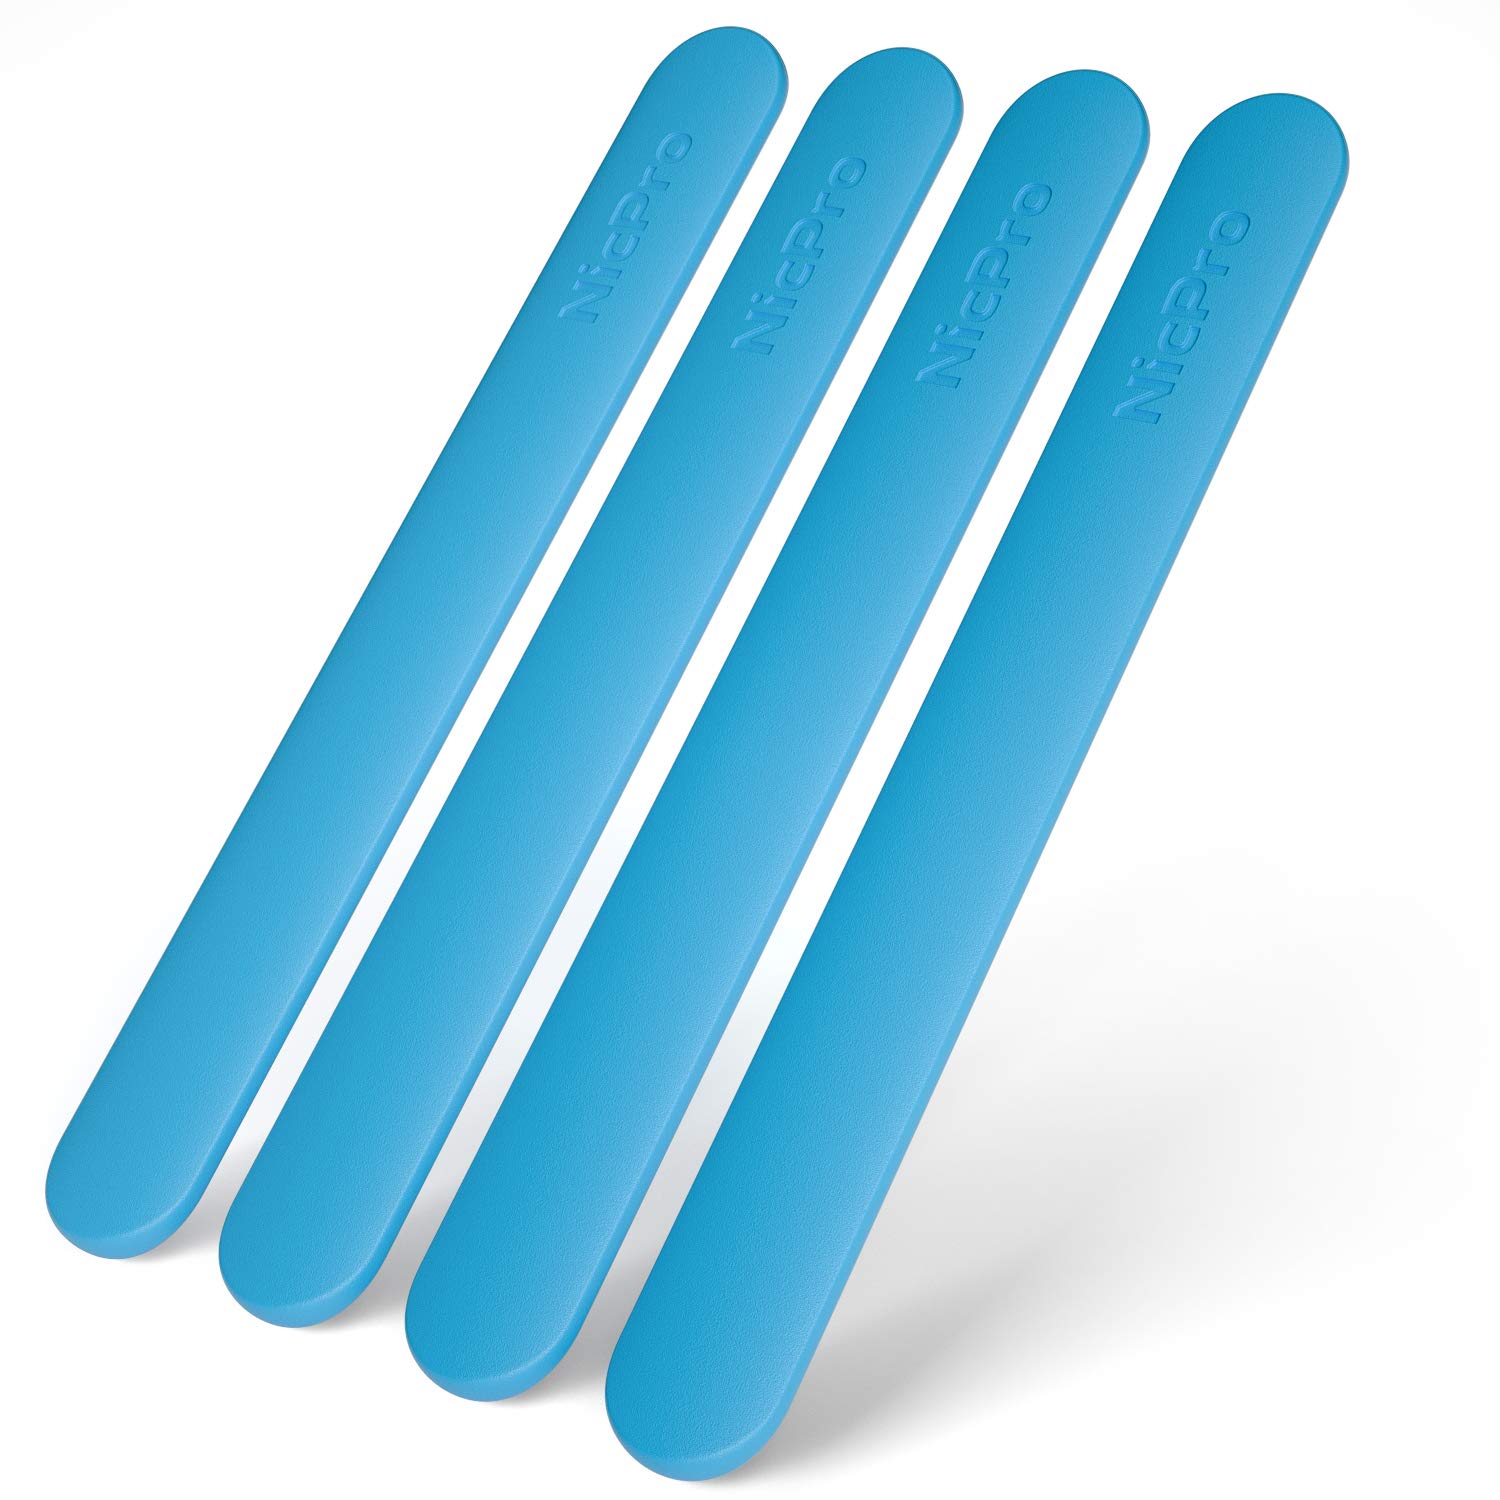 Nicpro 4PCS Silicone Stir Sticks Reusable Silicone Popsicle Sticks